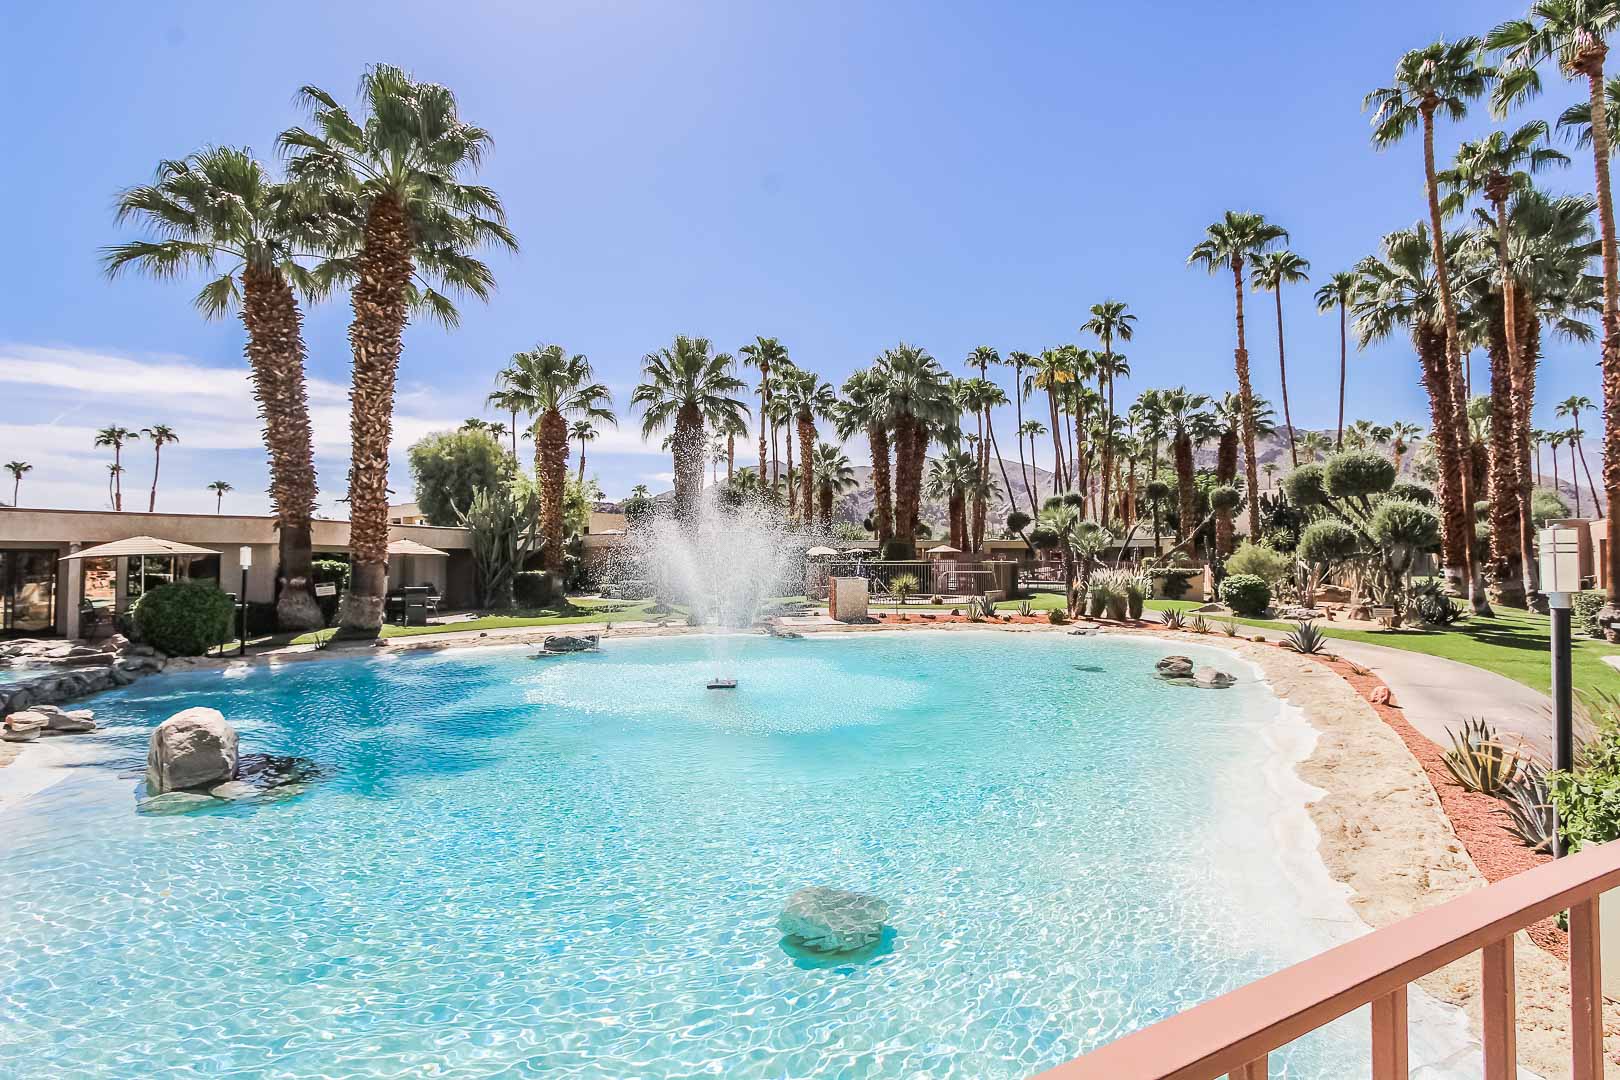 A refreshing outside view at VRI's Desert Isle Resort in California.